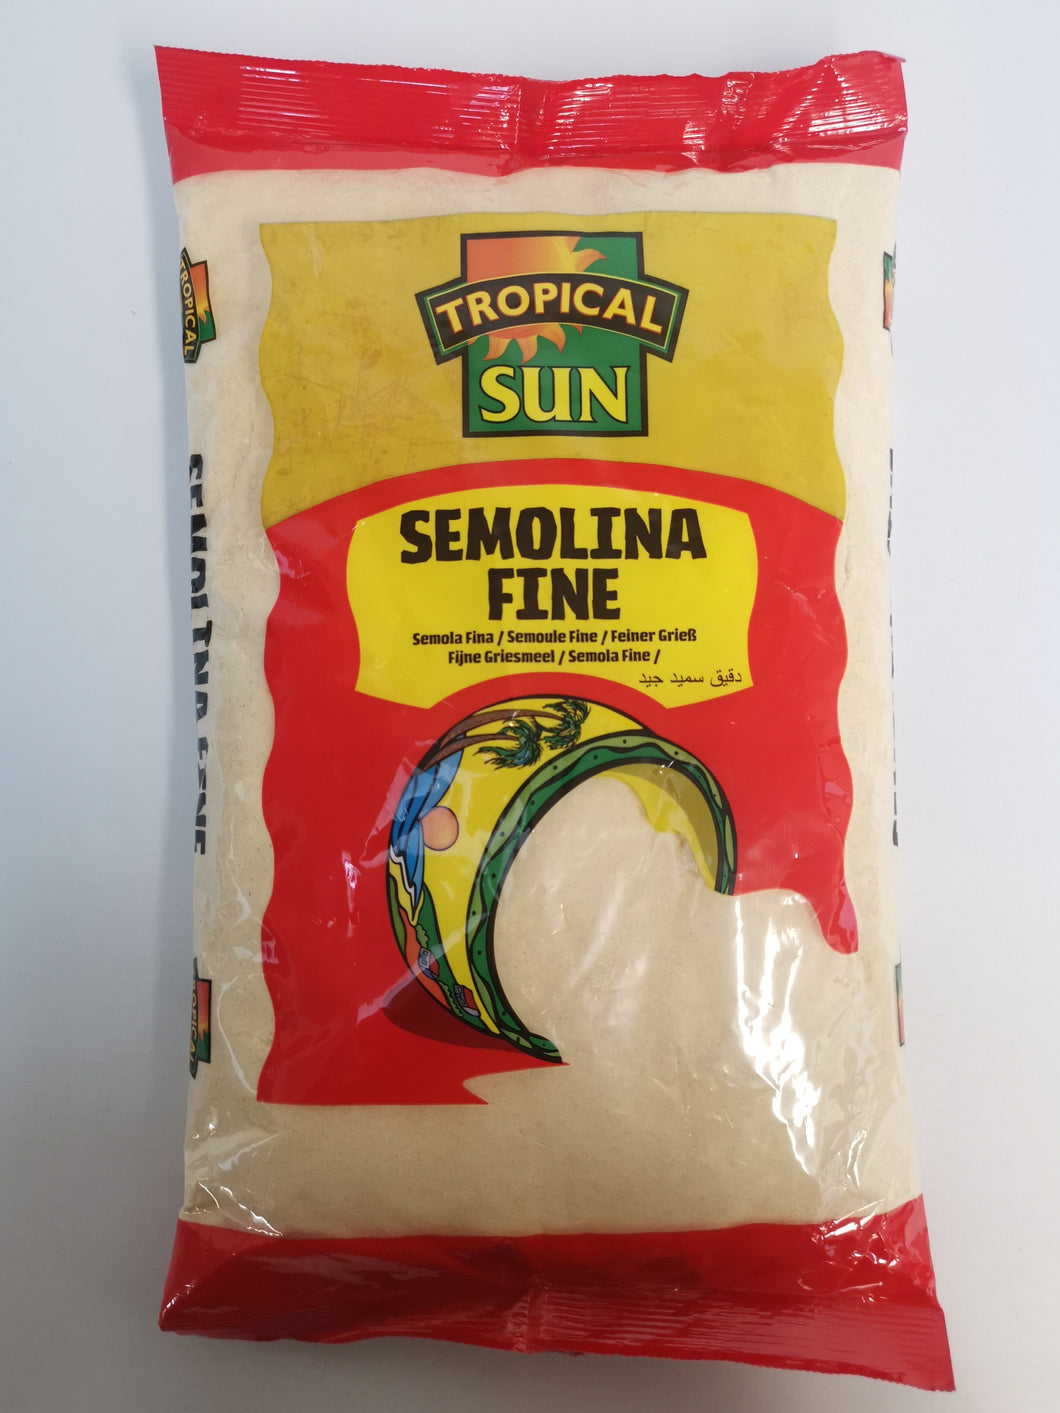 Tropical Sun Semolina Fine 1.5kg